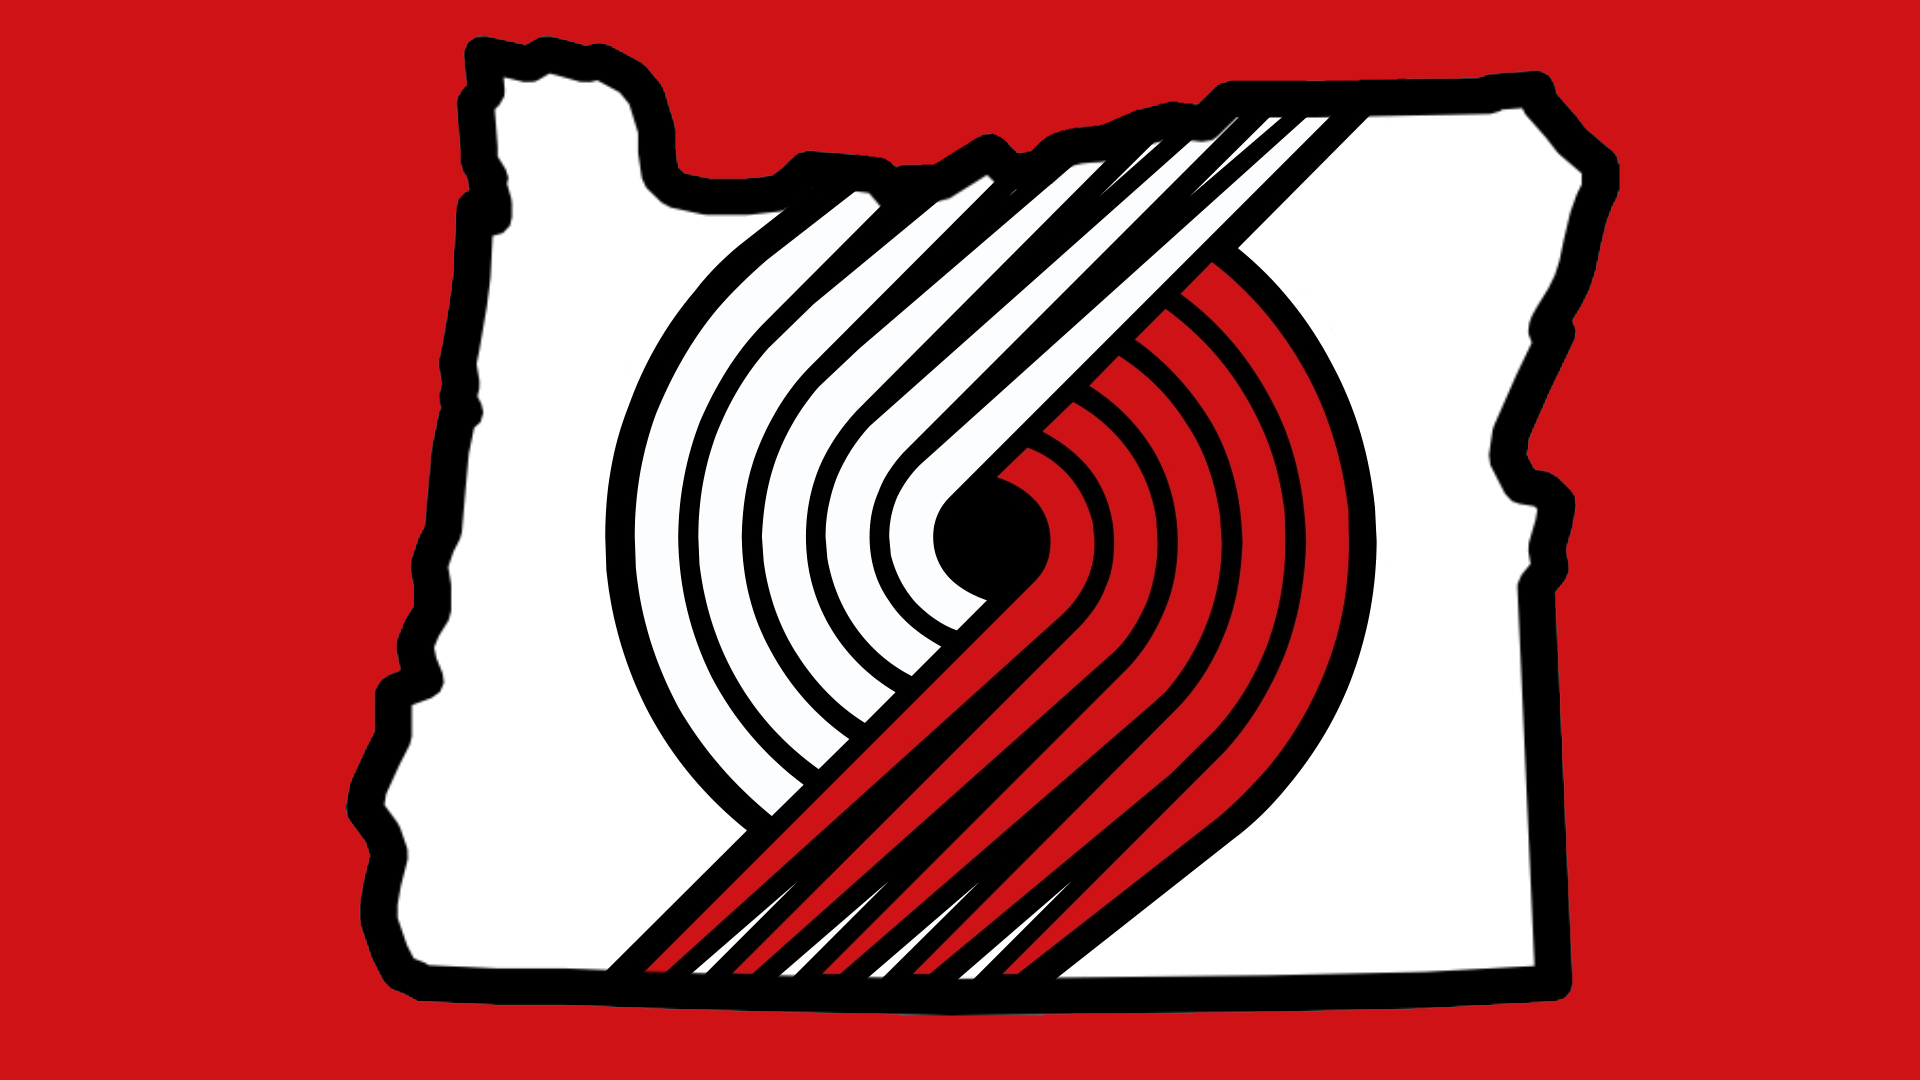 Portland Trail Blazers Logo Wallpaper. In preparation for